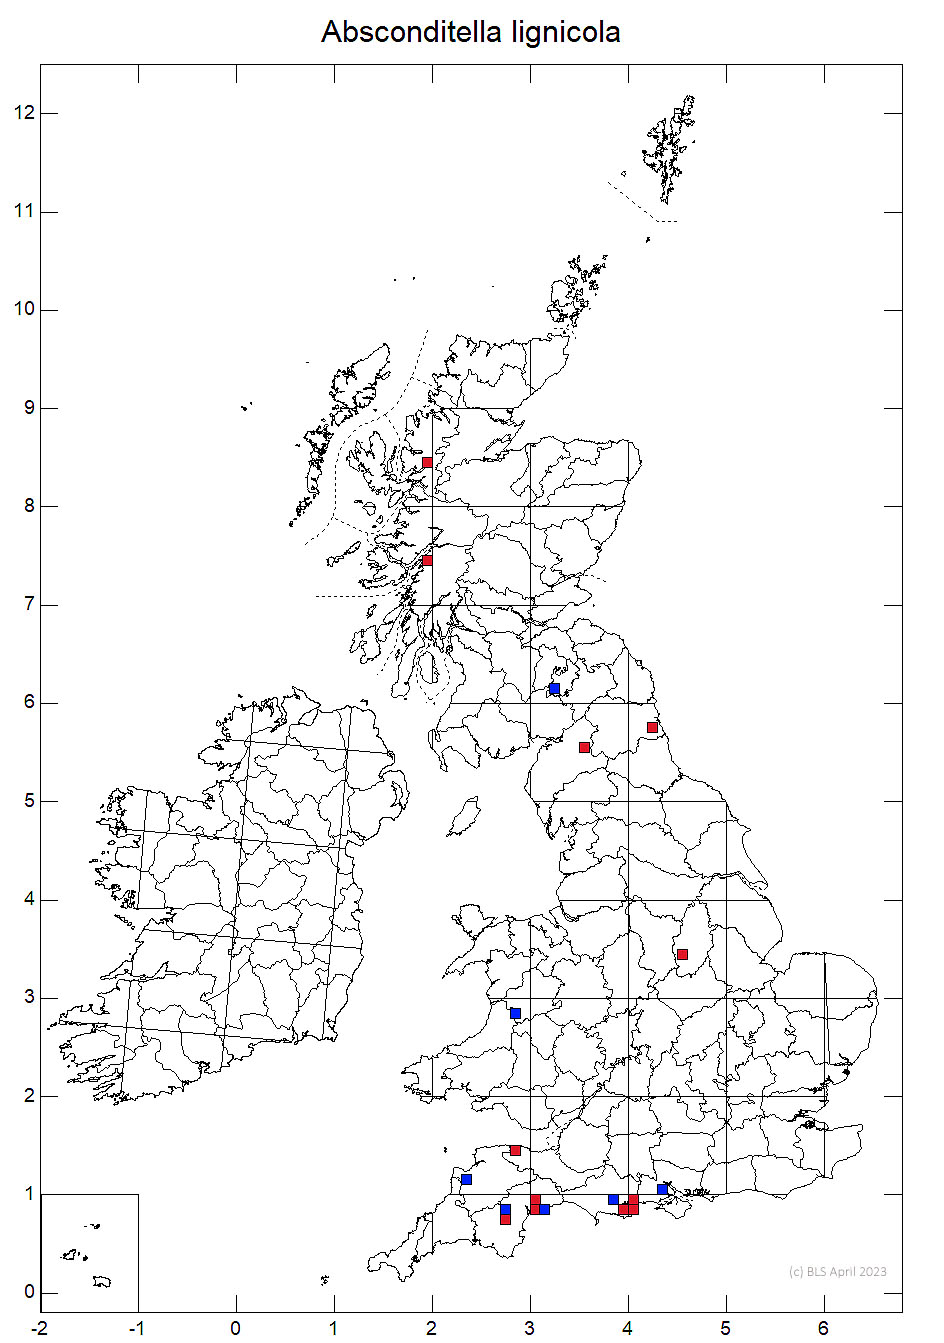 Absconditella lignicola 10km sq distribution map